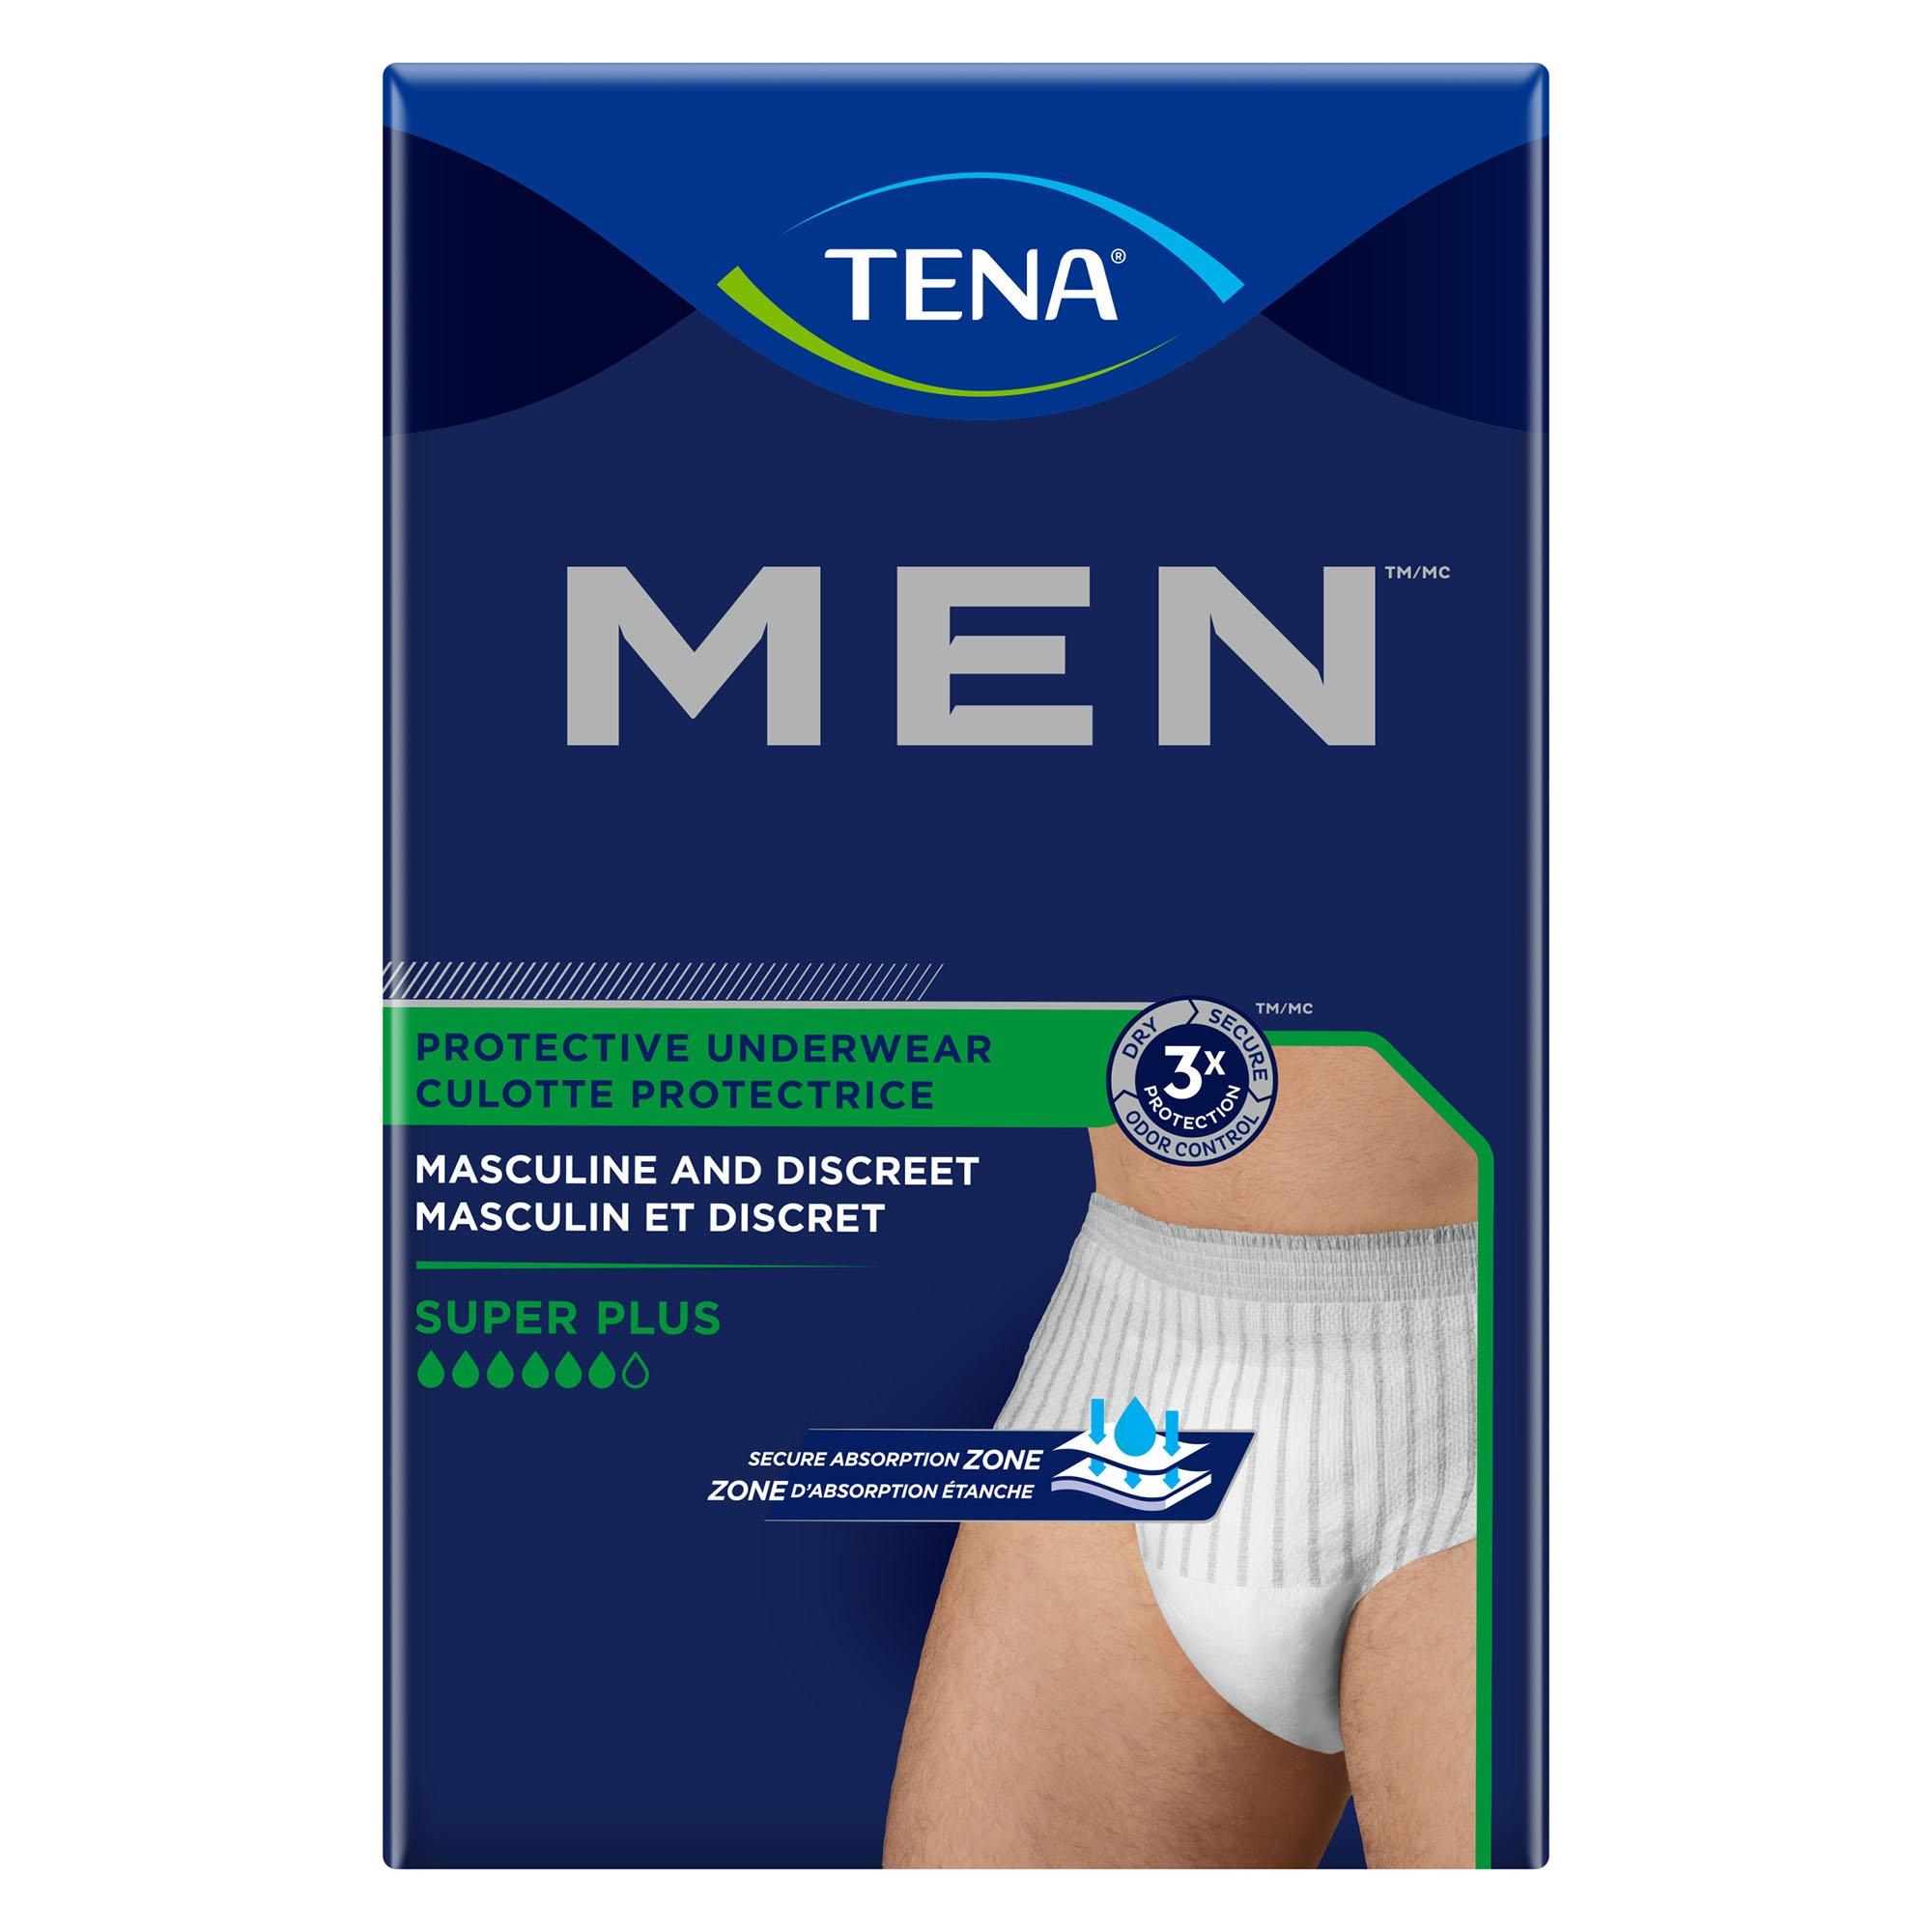 16 Pairs of Tena Stylish Black Underwear Women Adult Diapers Large